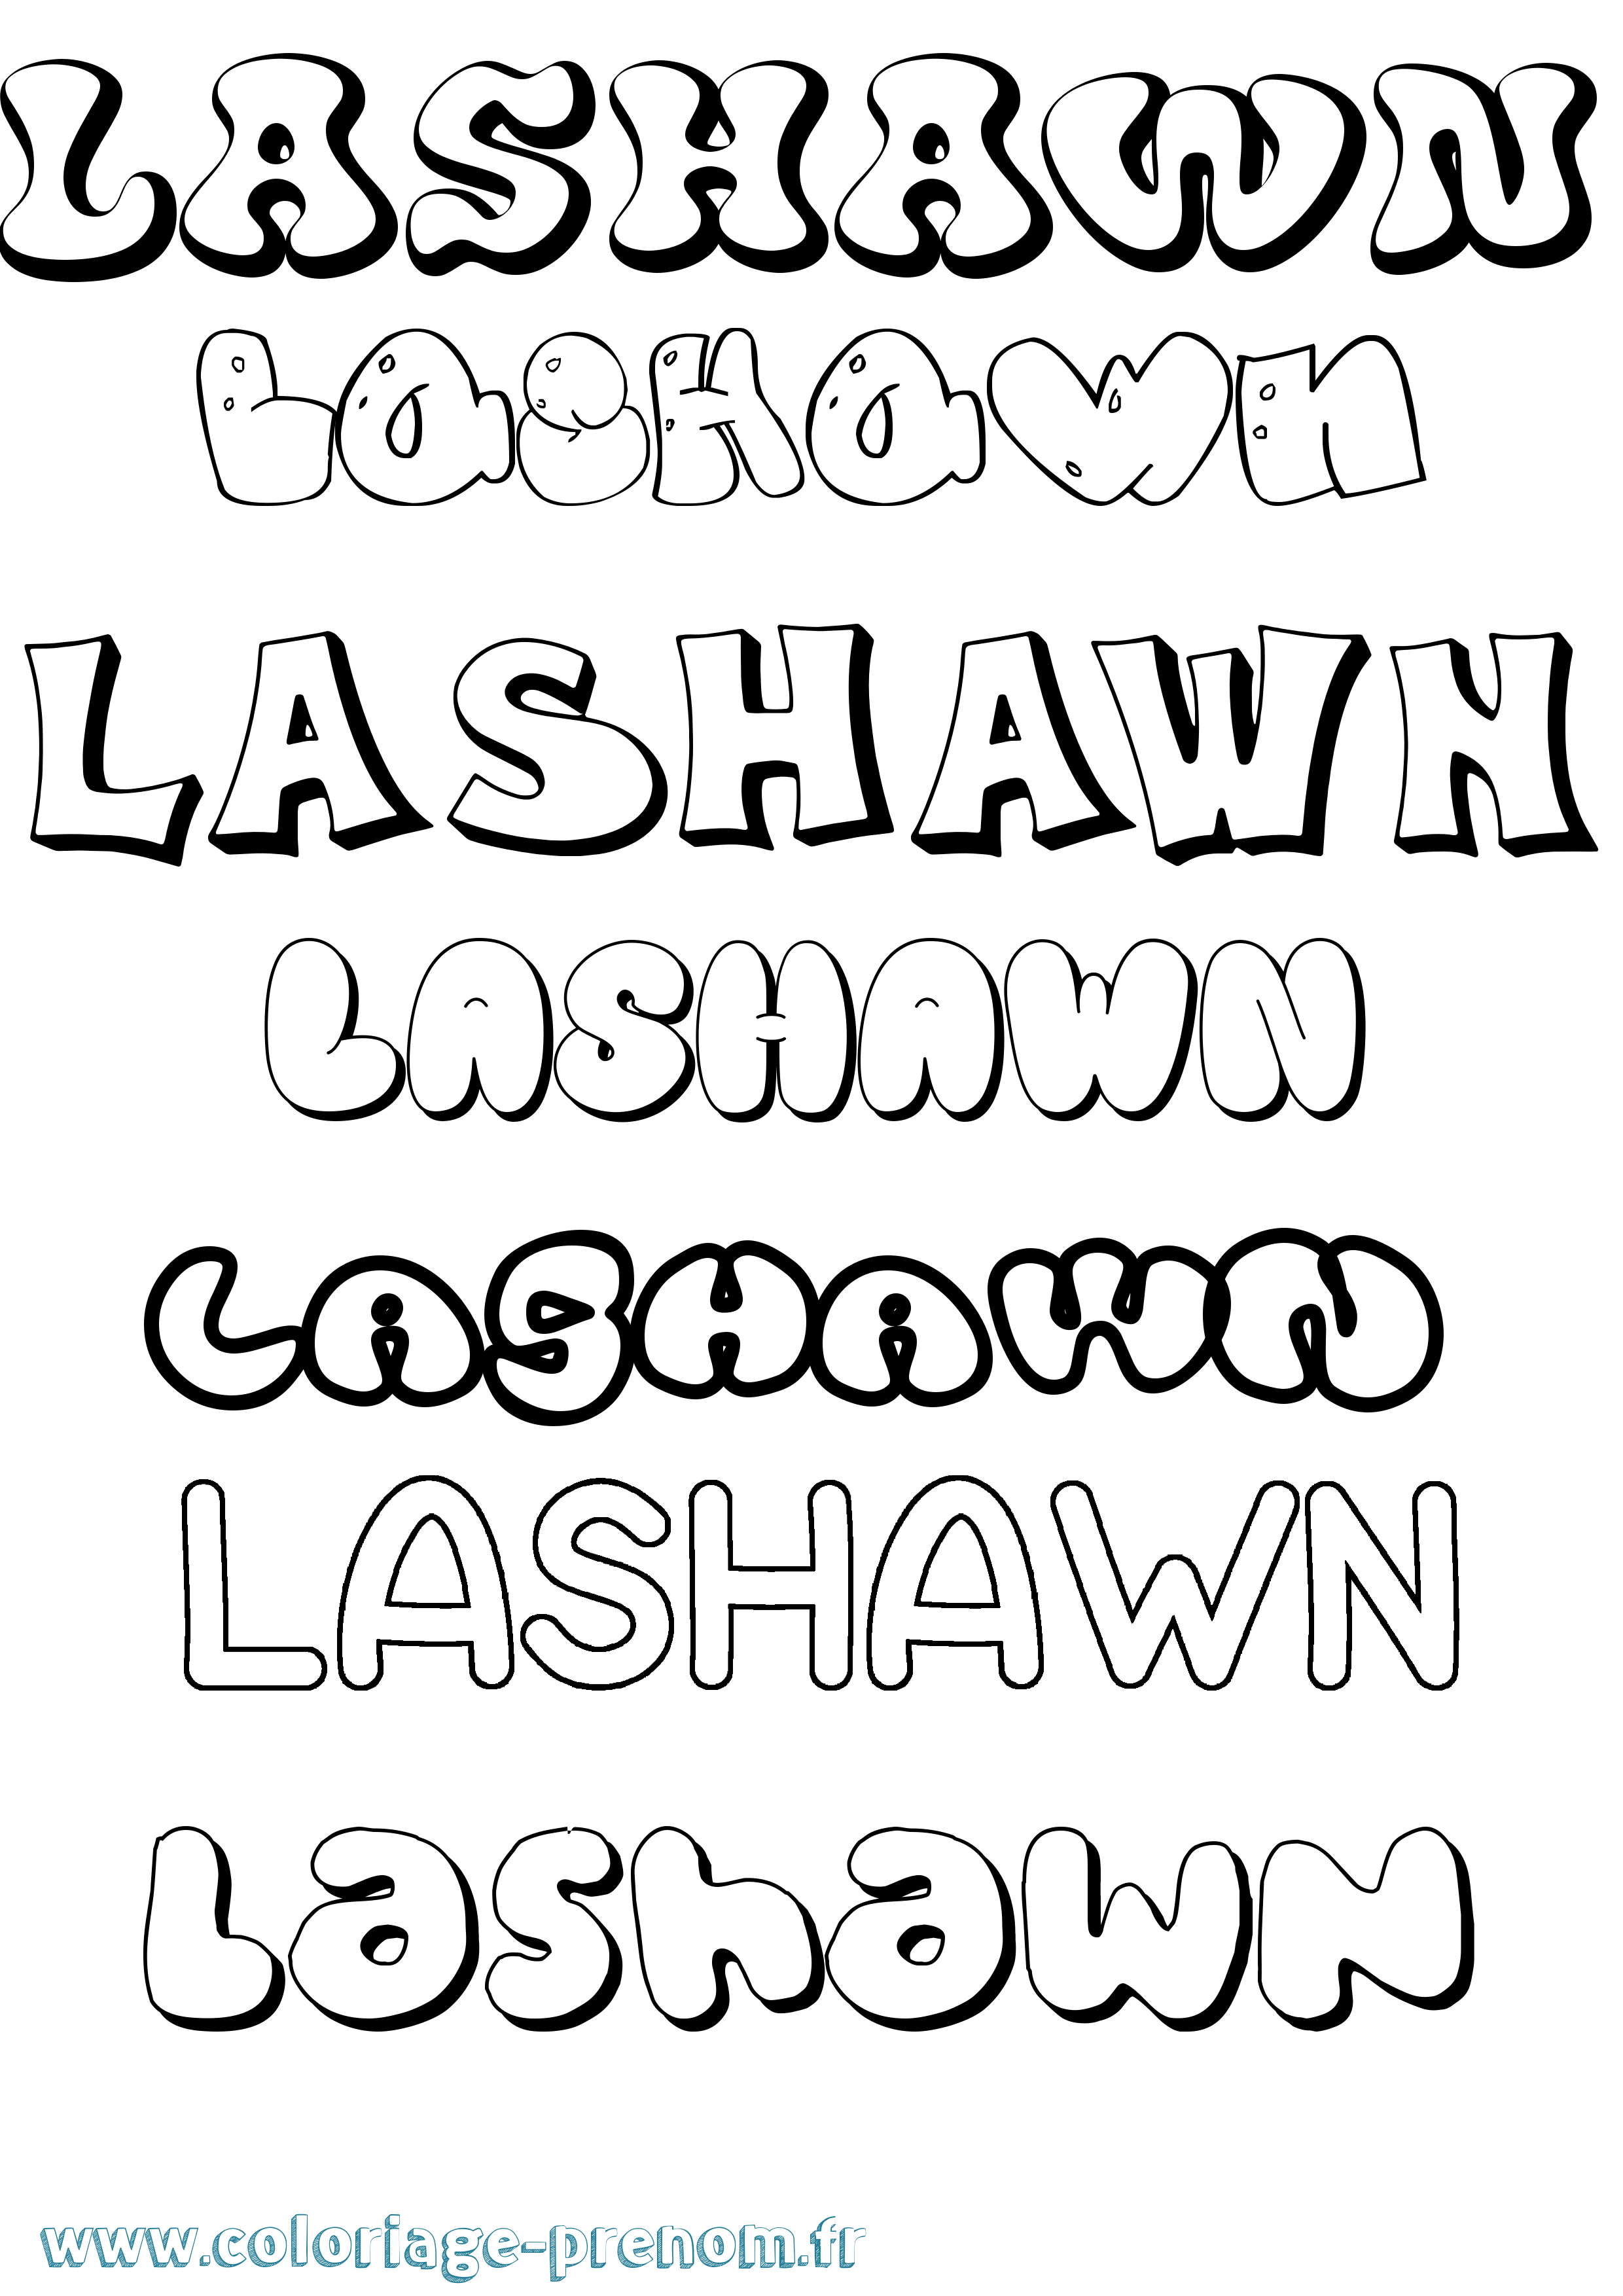 Coloriage prénom Lashawn Bubble